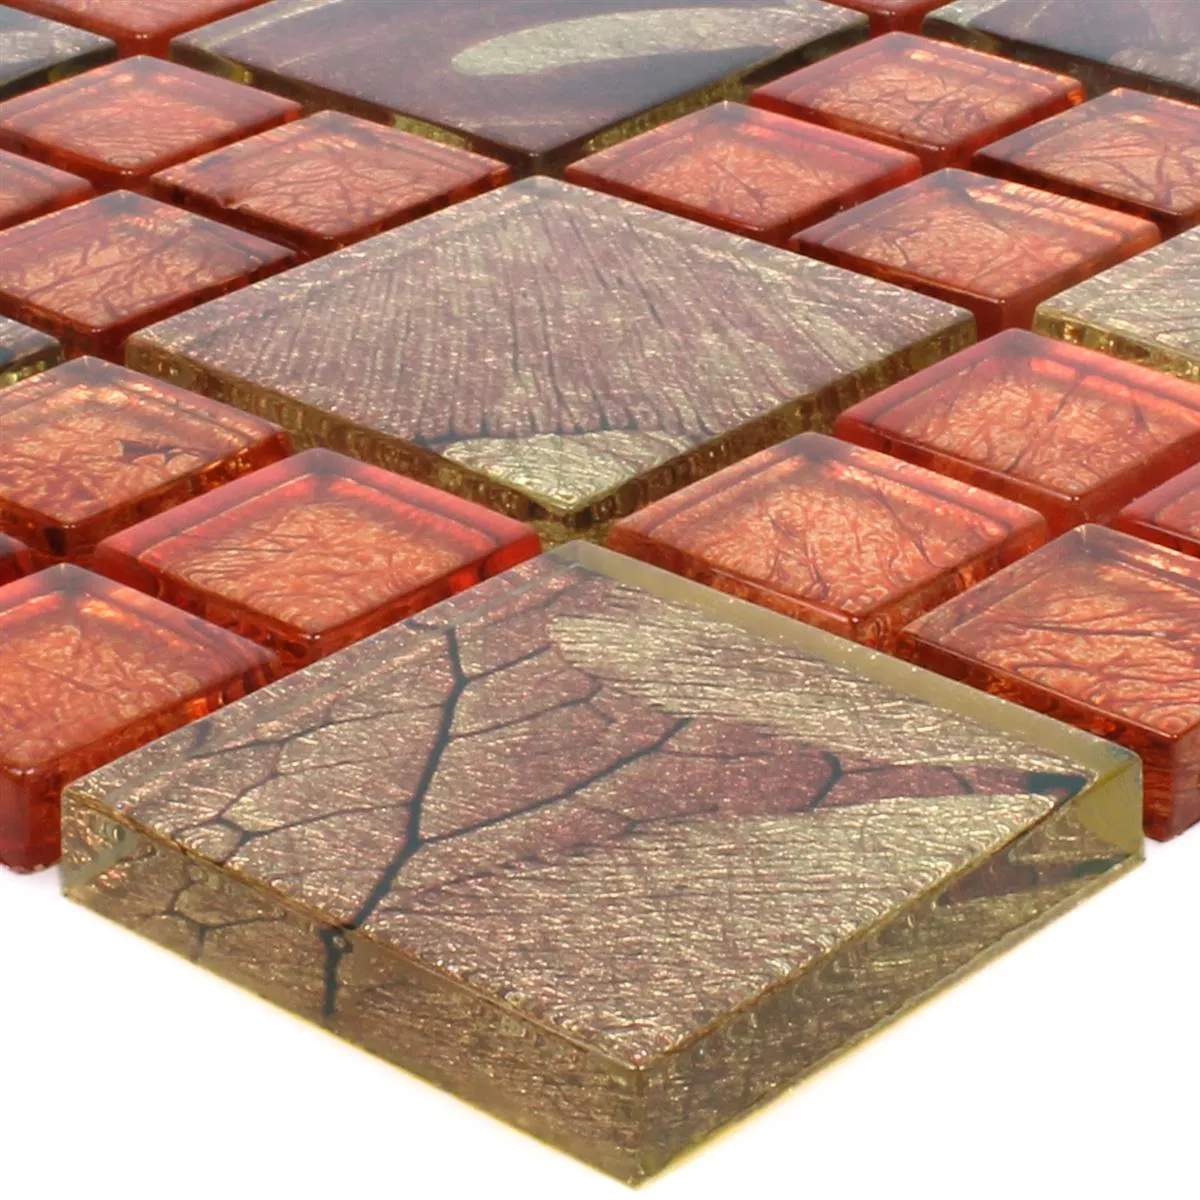 Mosaic Tiles Firebird Orange